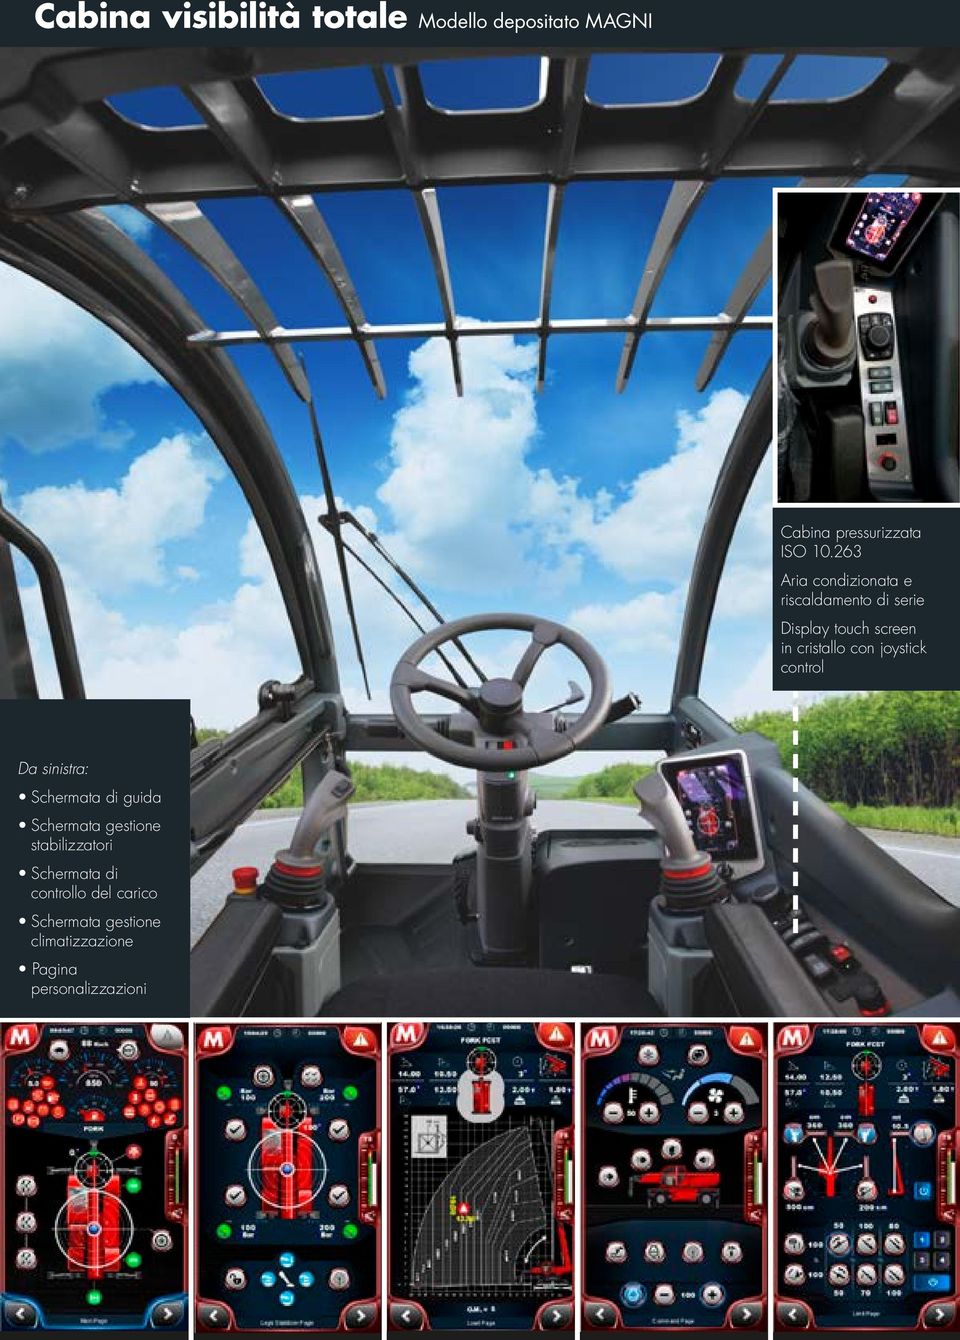 joystick control Da sinistra: Schermata di guida Schermata gestione stabilizzatori